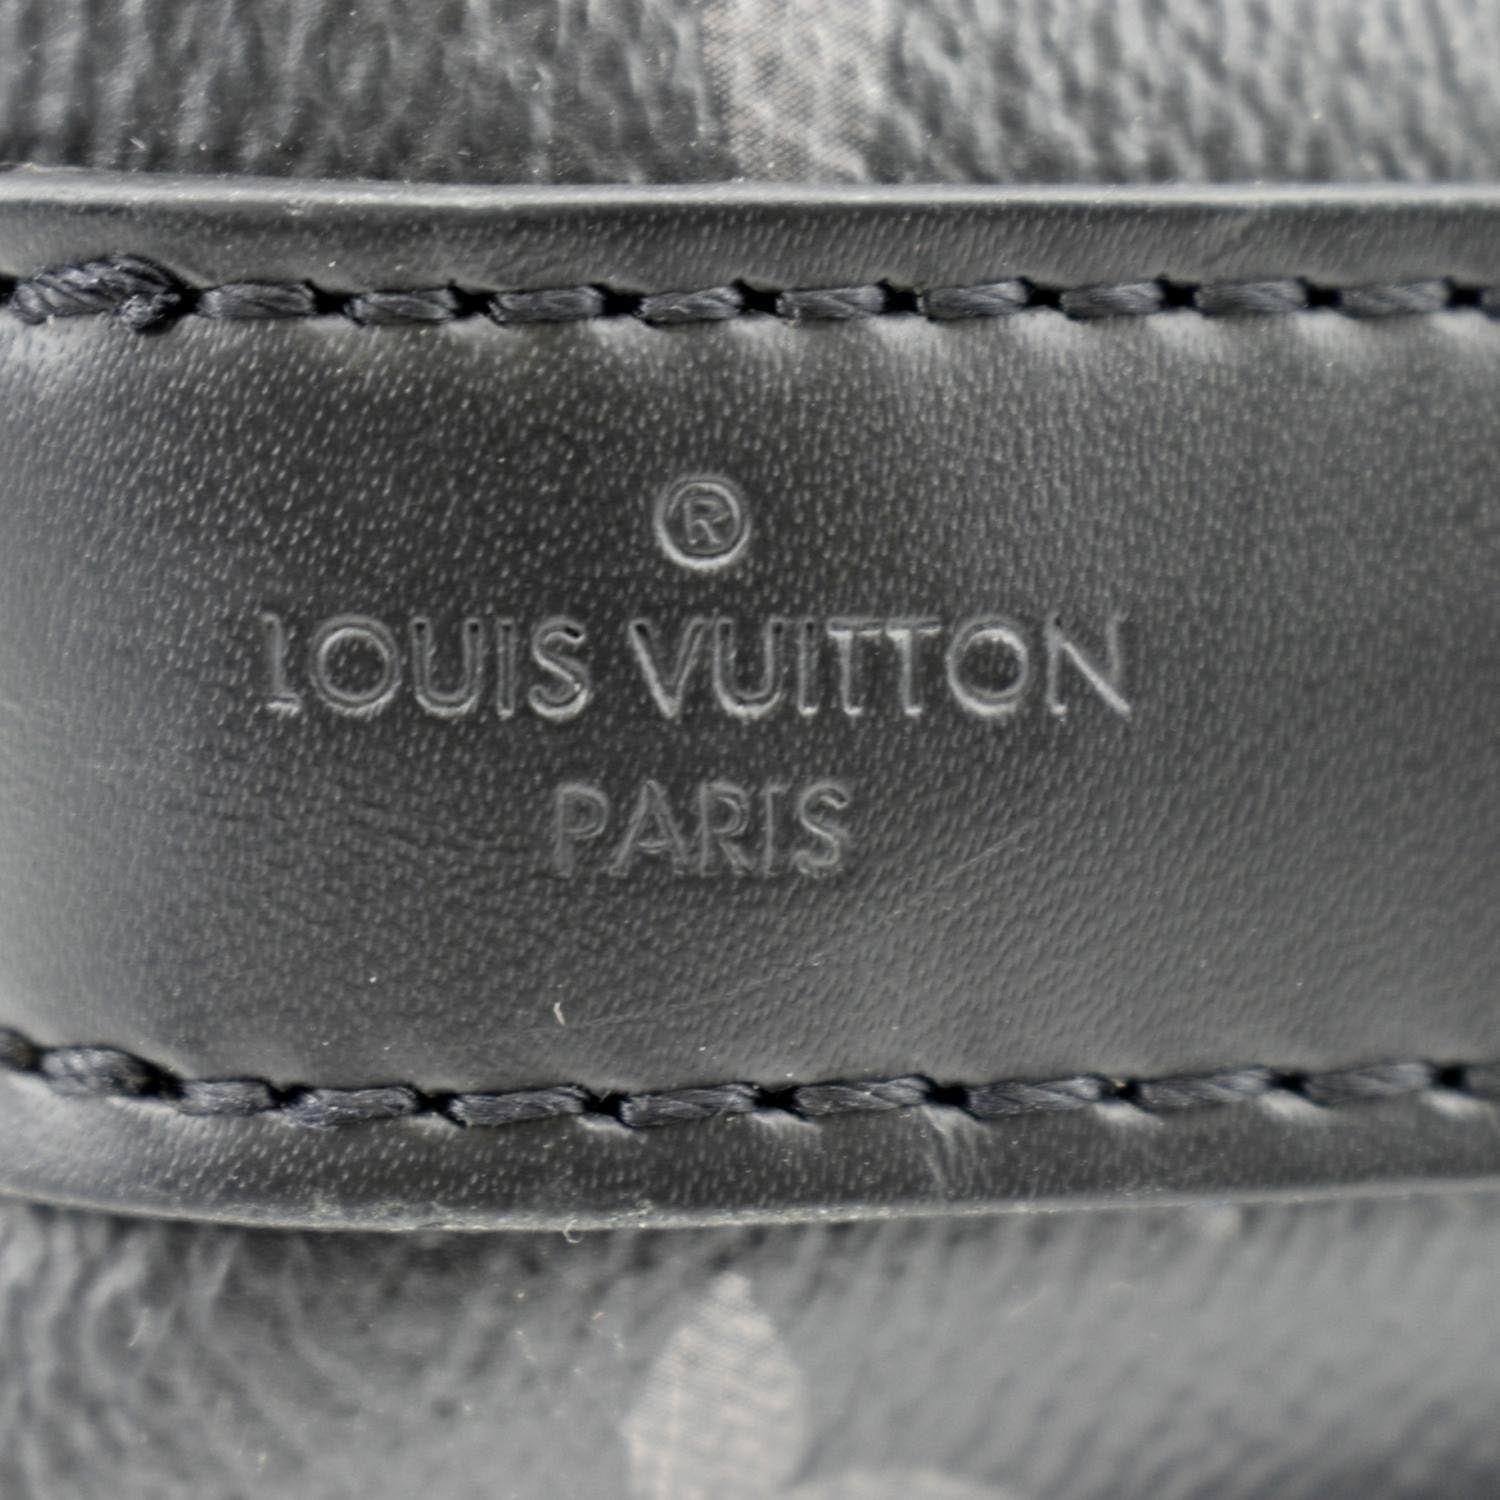 Louis Vuitton District Pm Messenger Black Purse/Handbag – Max Pawn